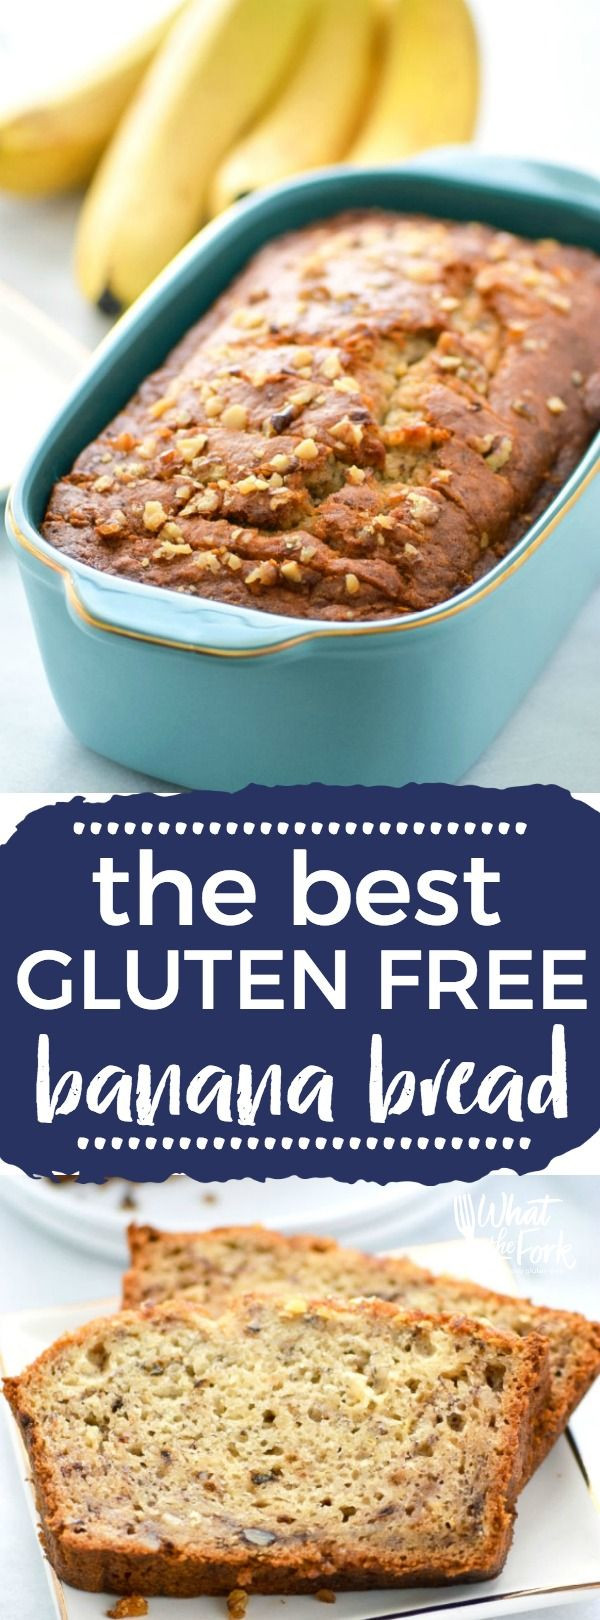 Gluten Free Foods Recipes
 1000 ideas about Gluten Free Foods on Pinterest